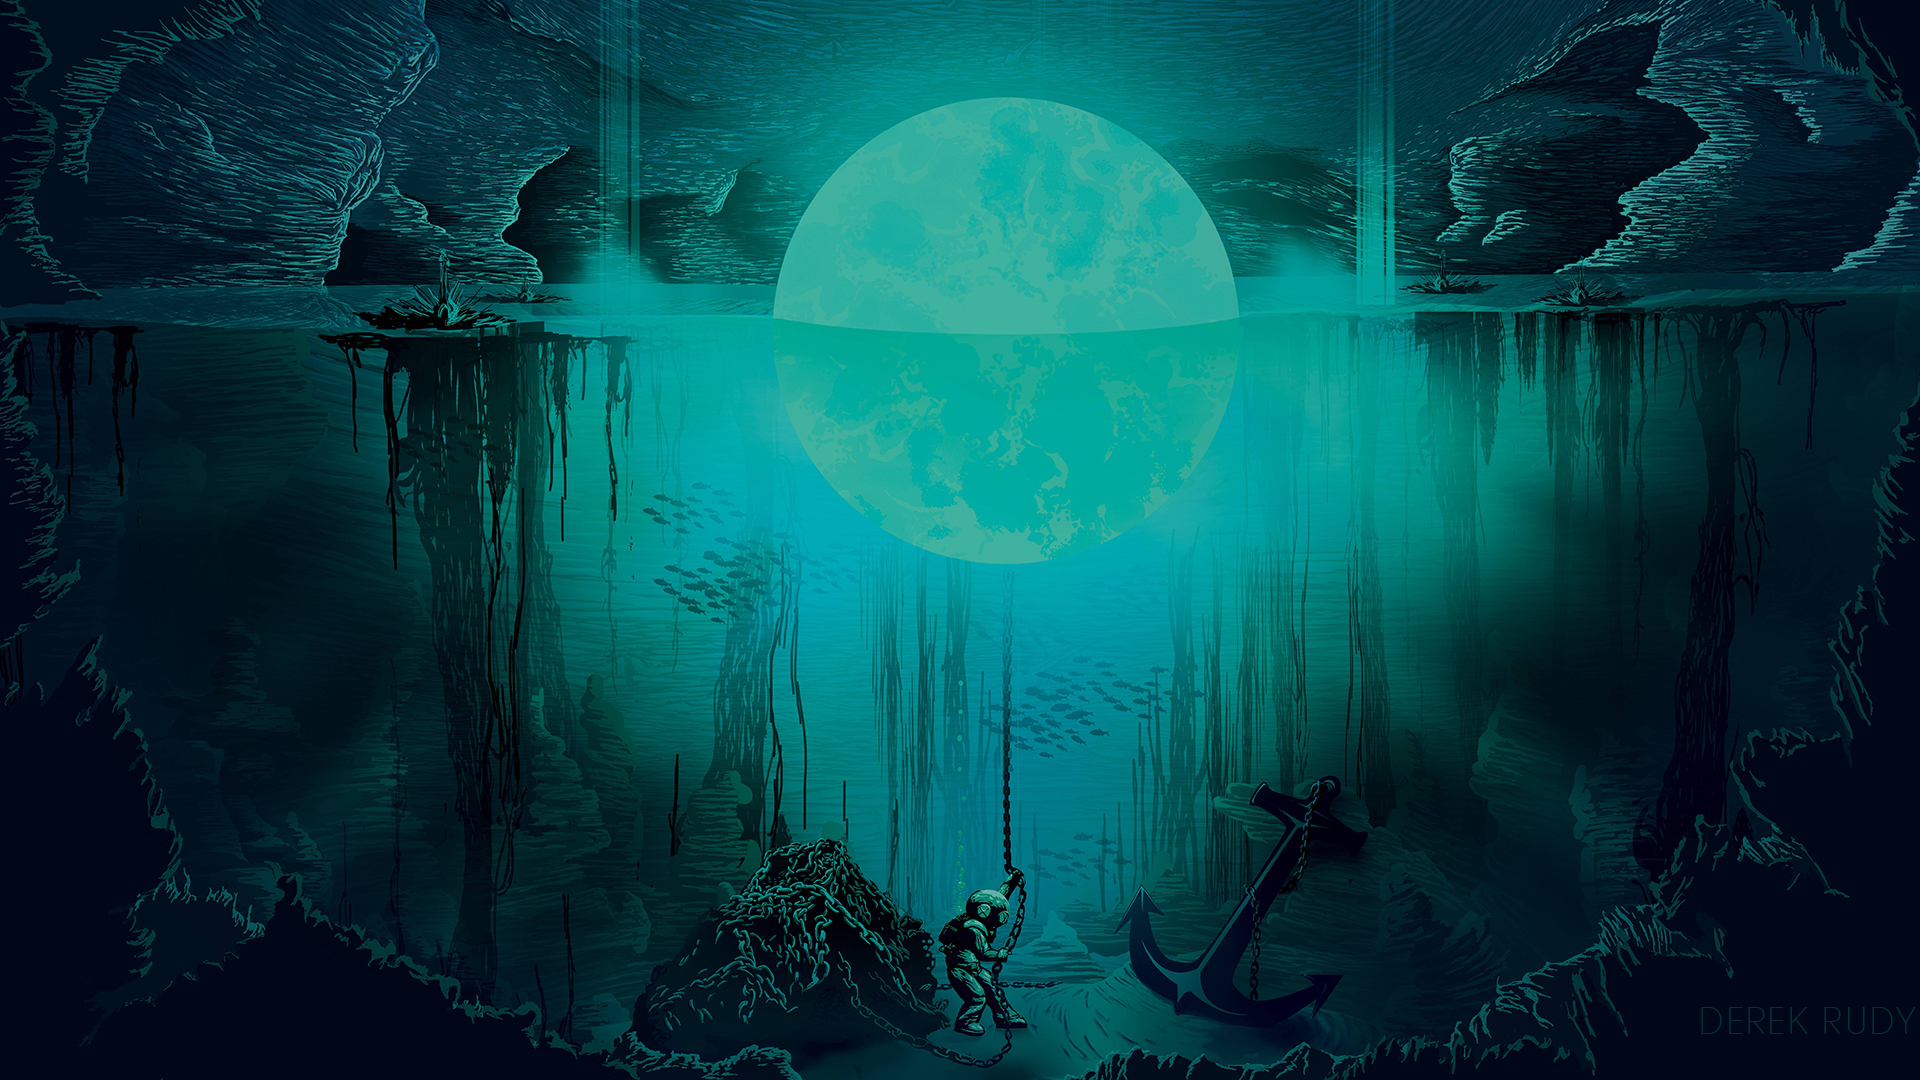 Derek Rudy Moon Digital Art Blue Sea Underwater Artwork Divers Anchors Turquoise Cthulhu 1920x1080